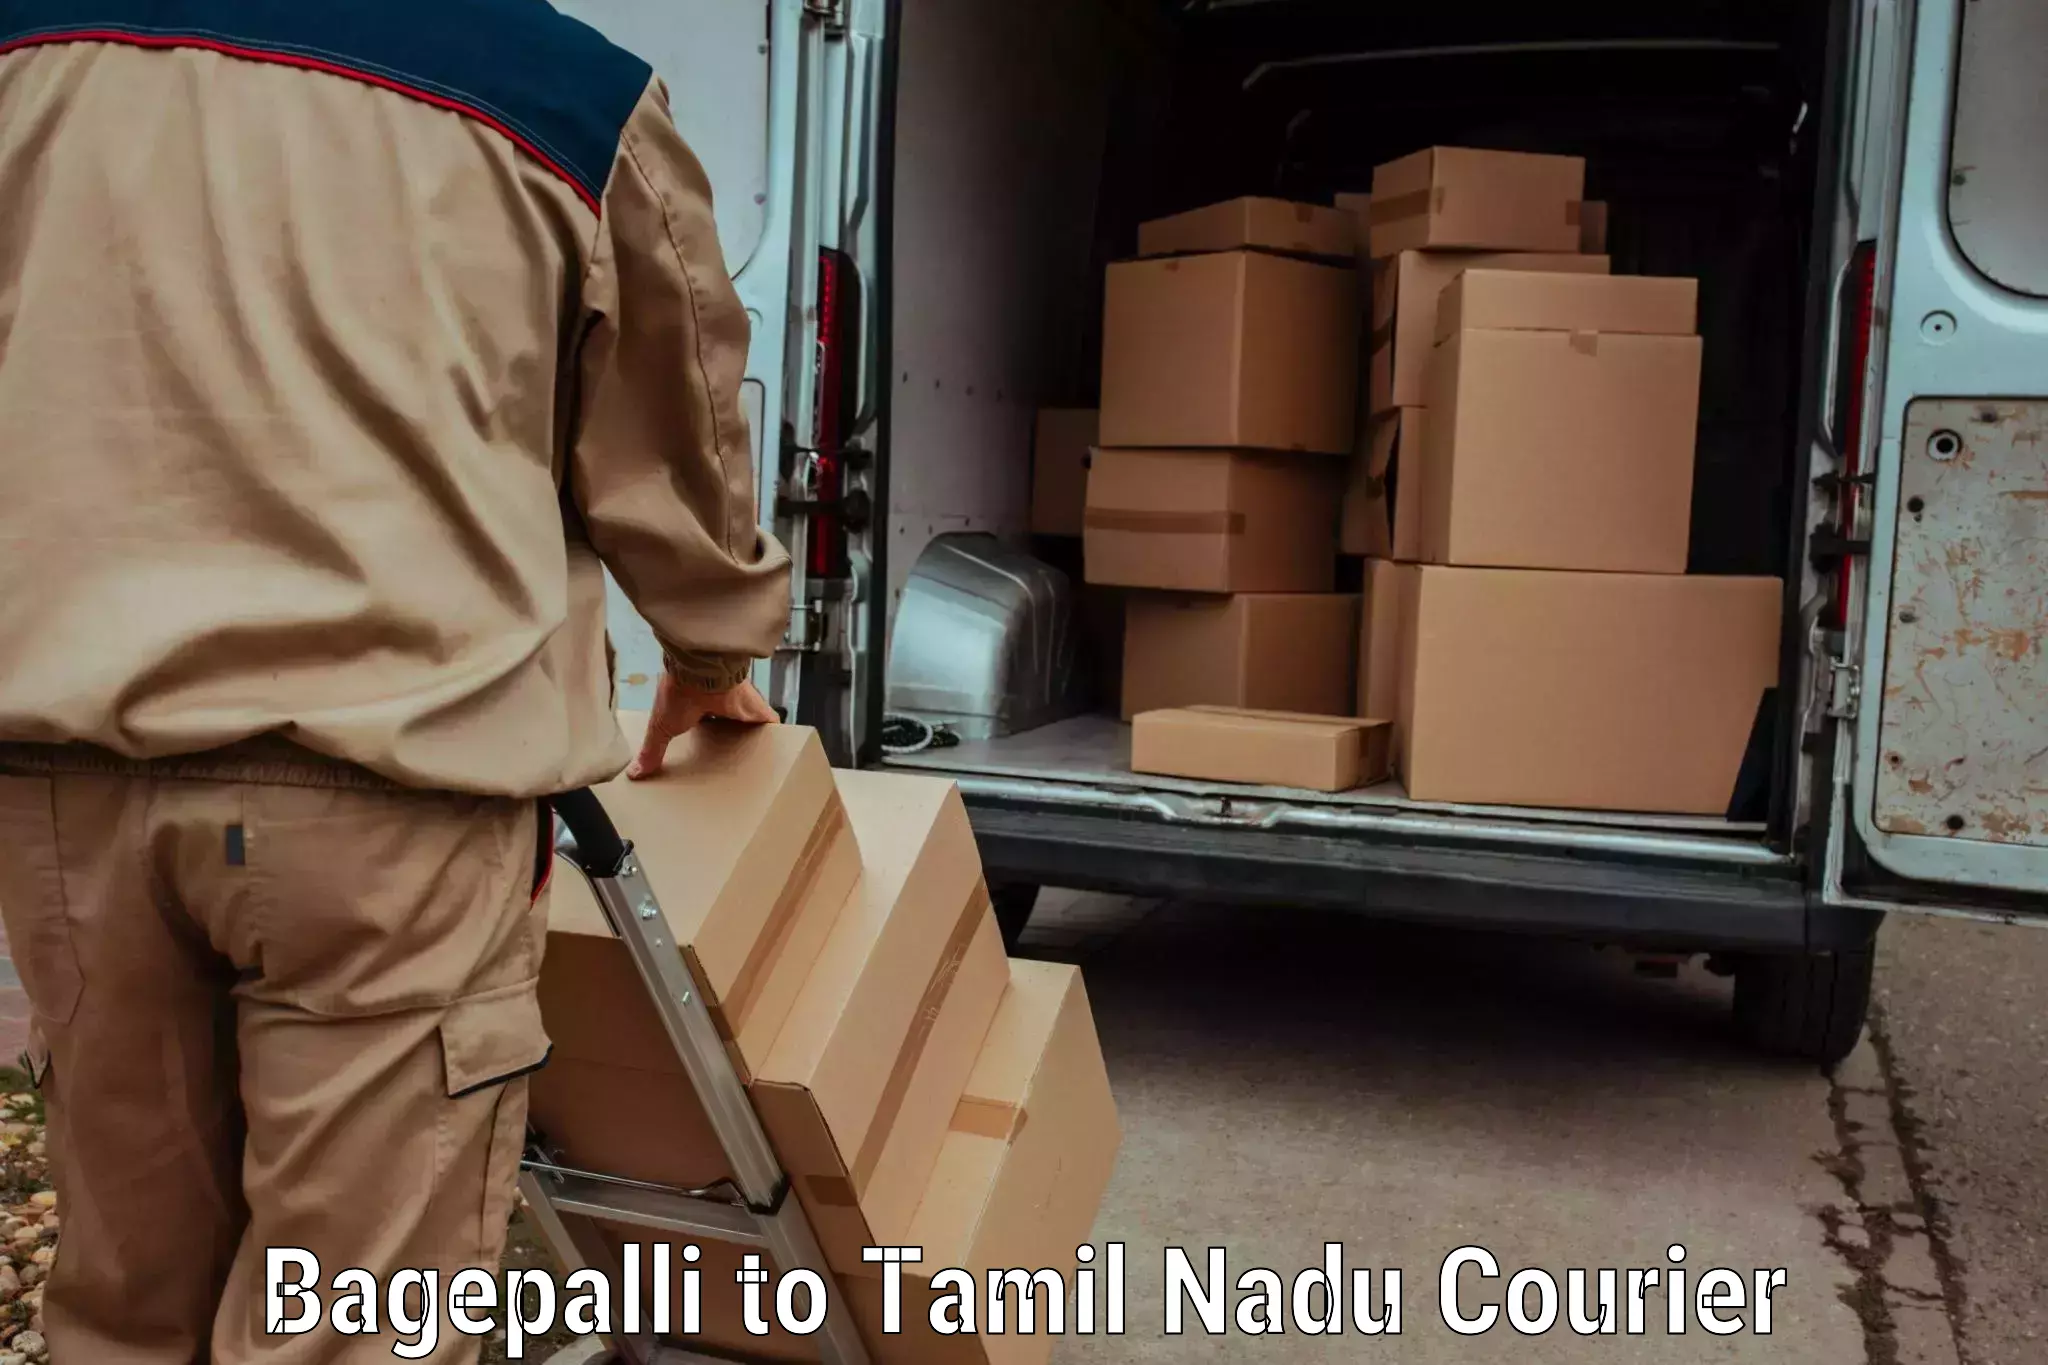 End-to-end delivery Bagepalli to Kodaikanal